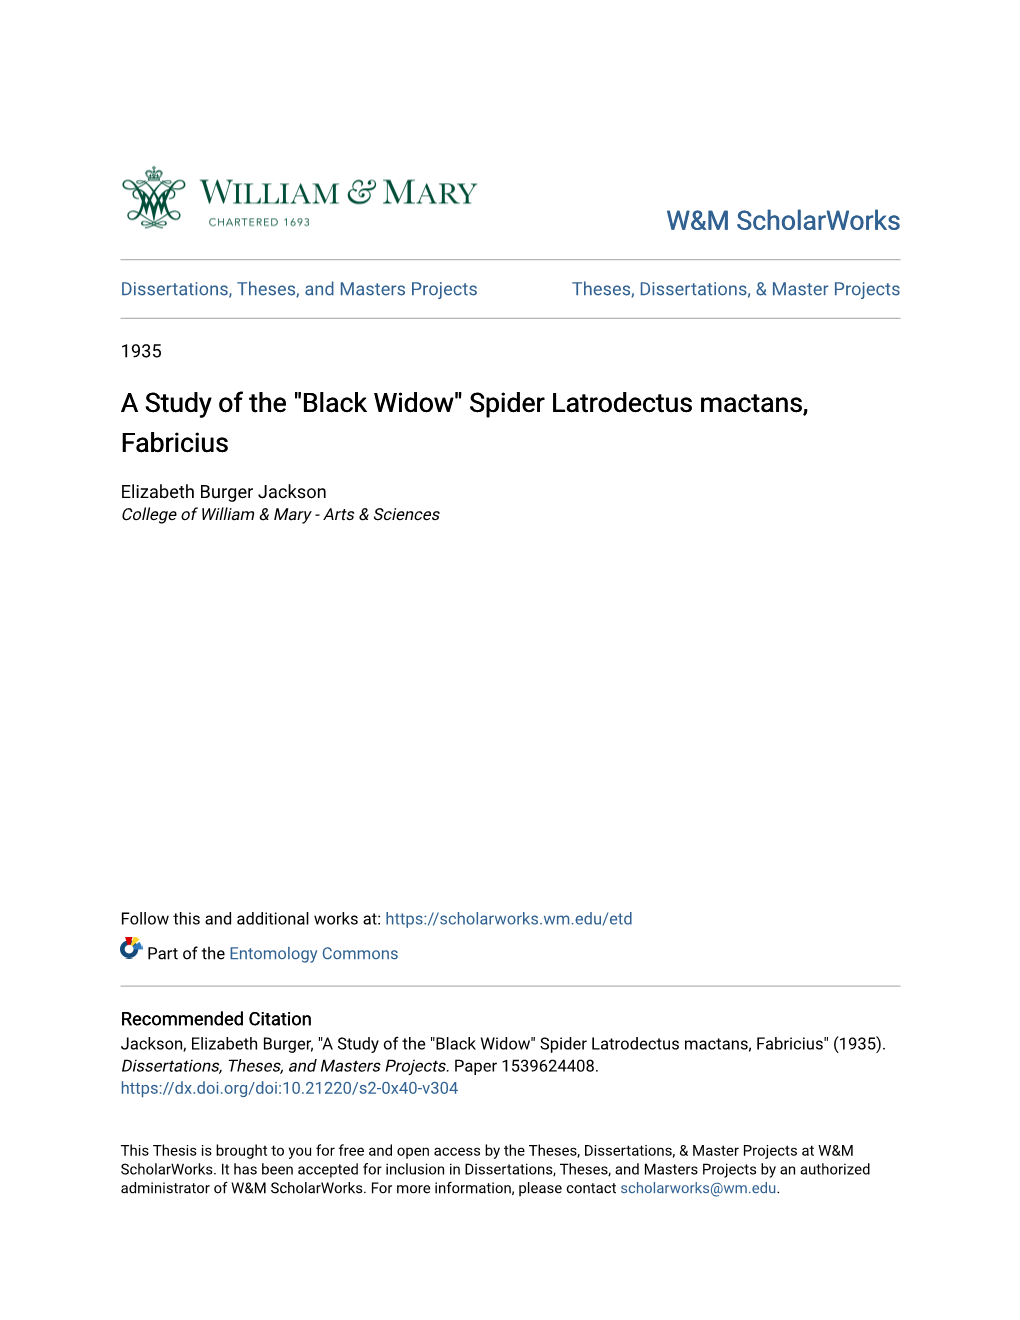 A Study of the "Black Widow" Spider Latrodectus Mactans, Fabricius